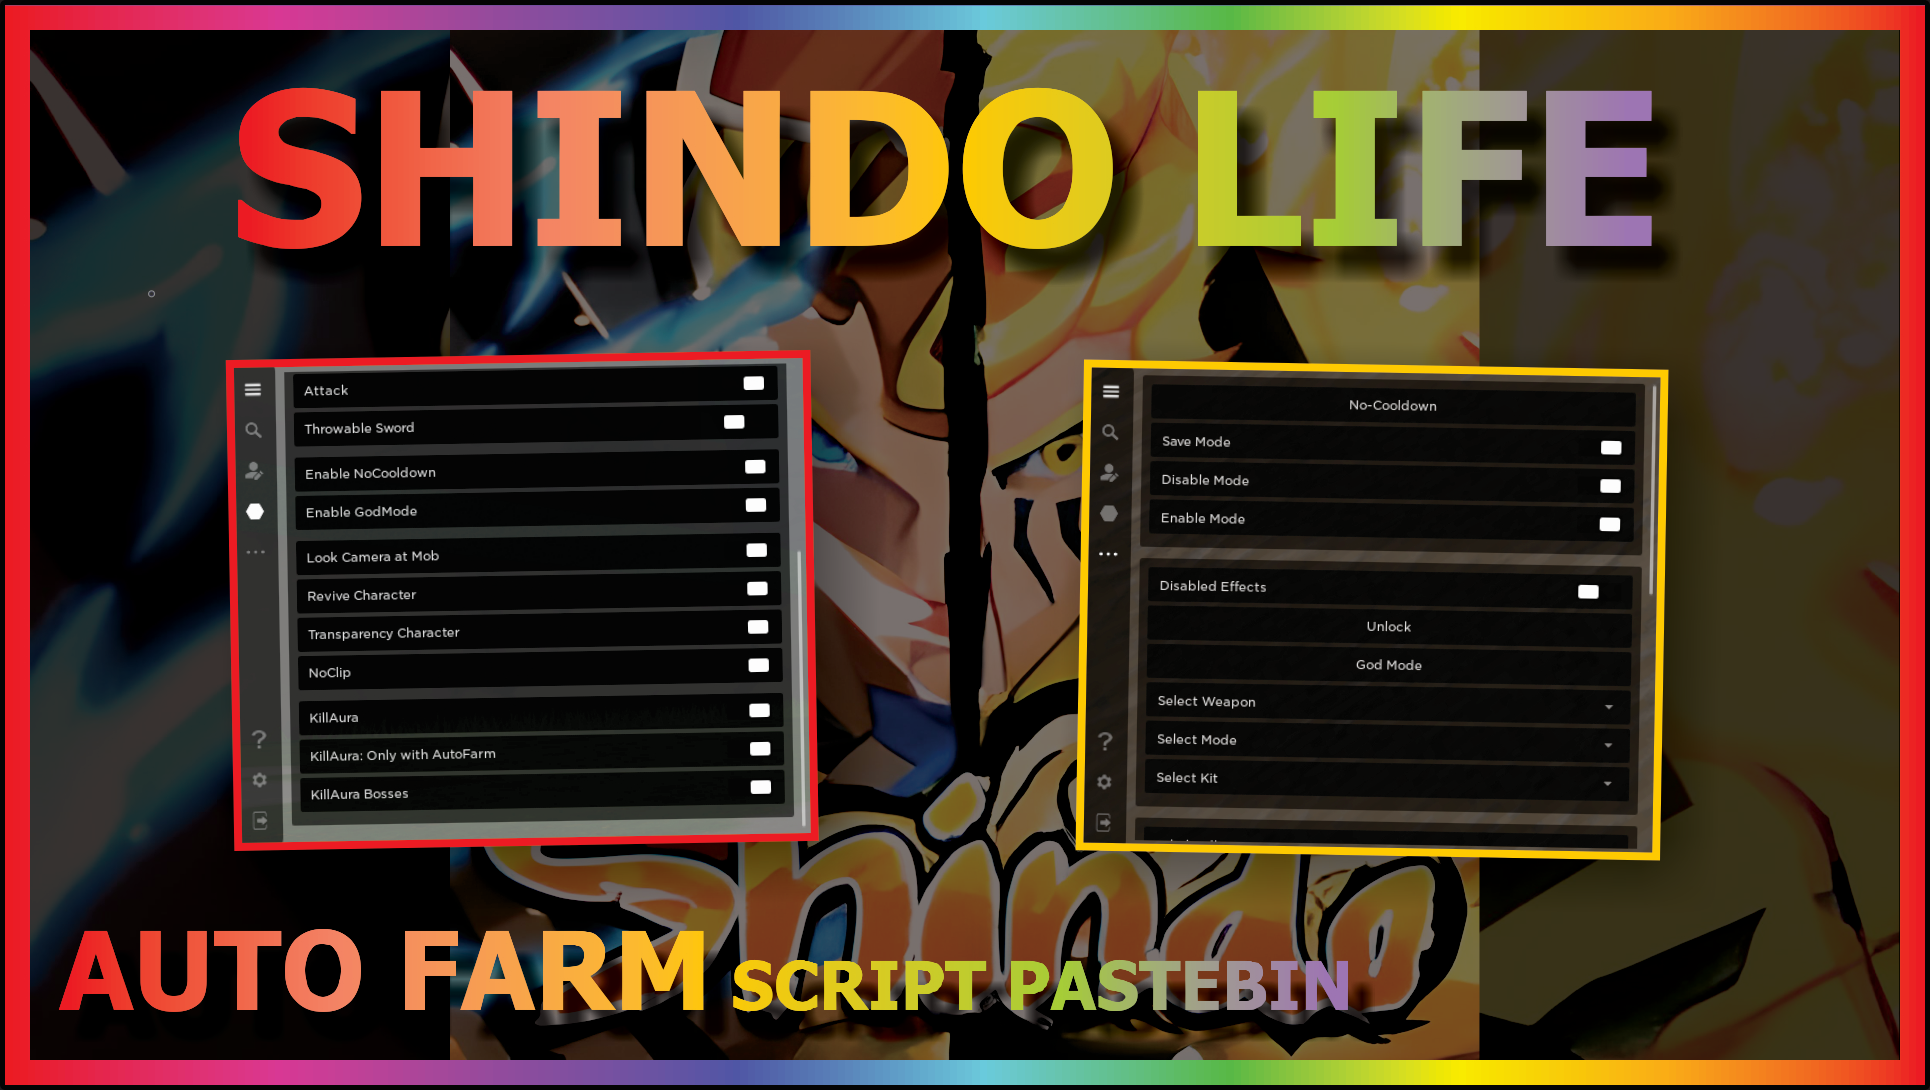 Shindo life script. Script Shindo Life auto Farm. Скрипт на Шиндо лайф. Шиндо скрипт auto Farm.